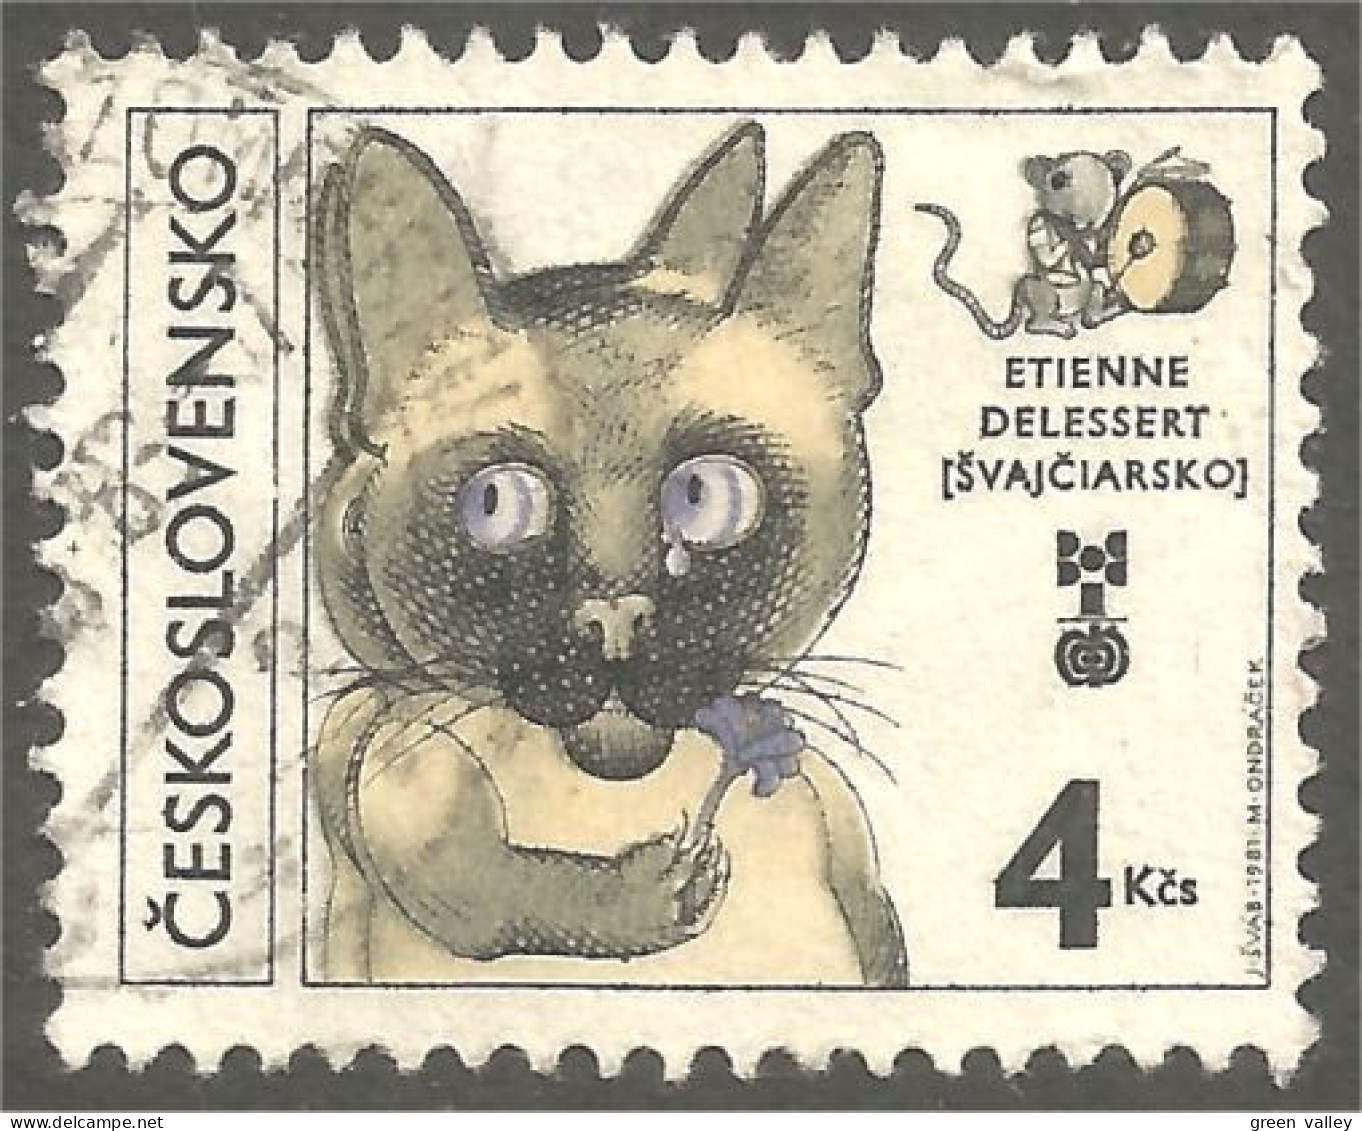 AS-24 Ceskoslovenko Chat Cat Katze Gatto Gato Kat - Domestic Cats